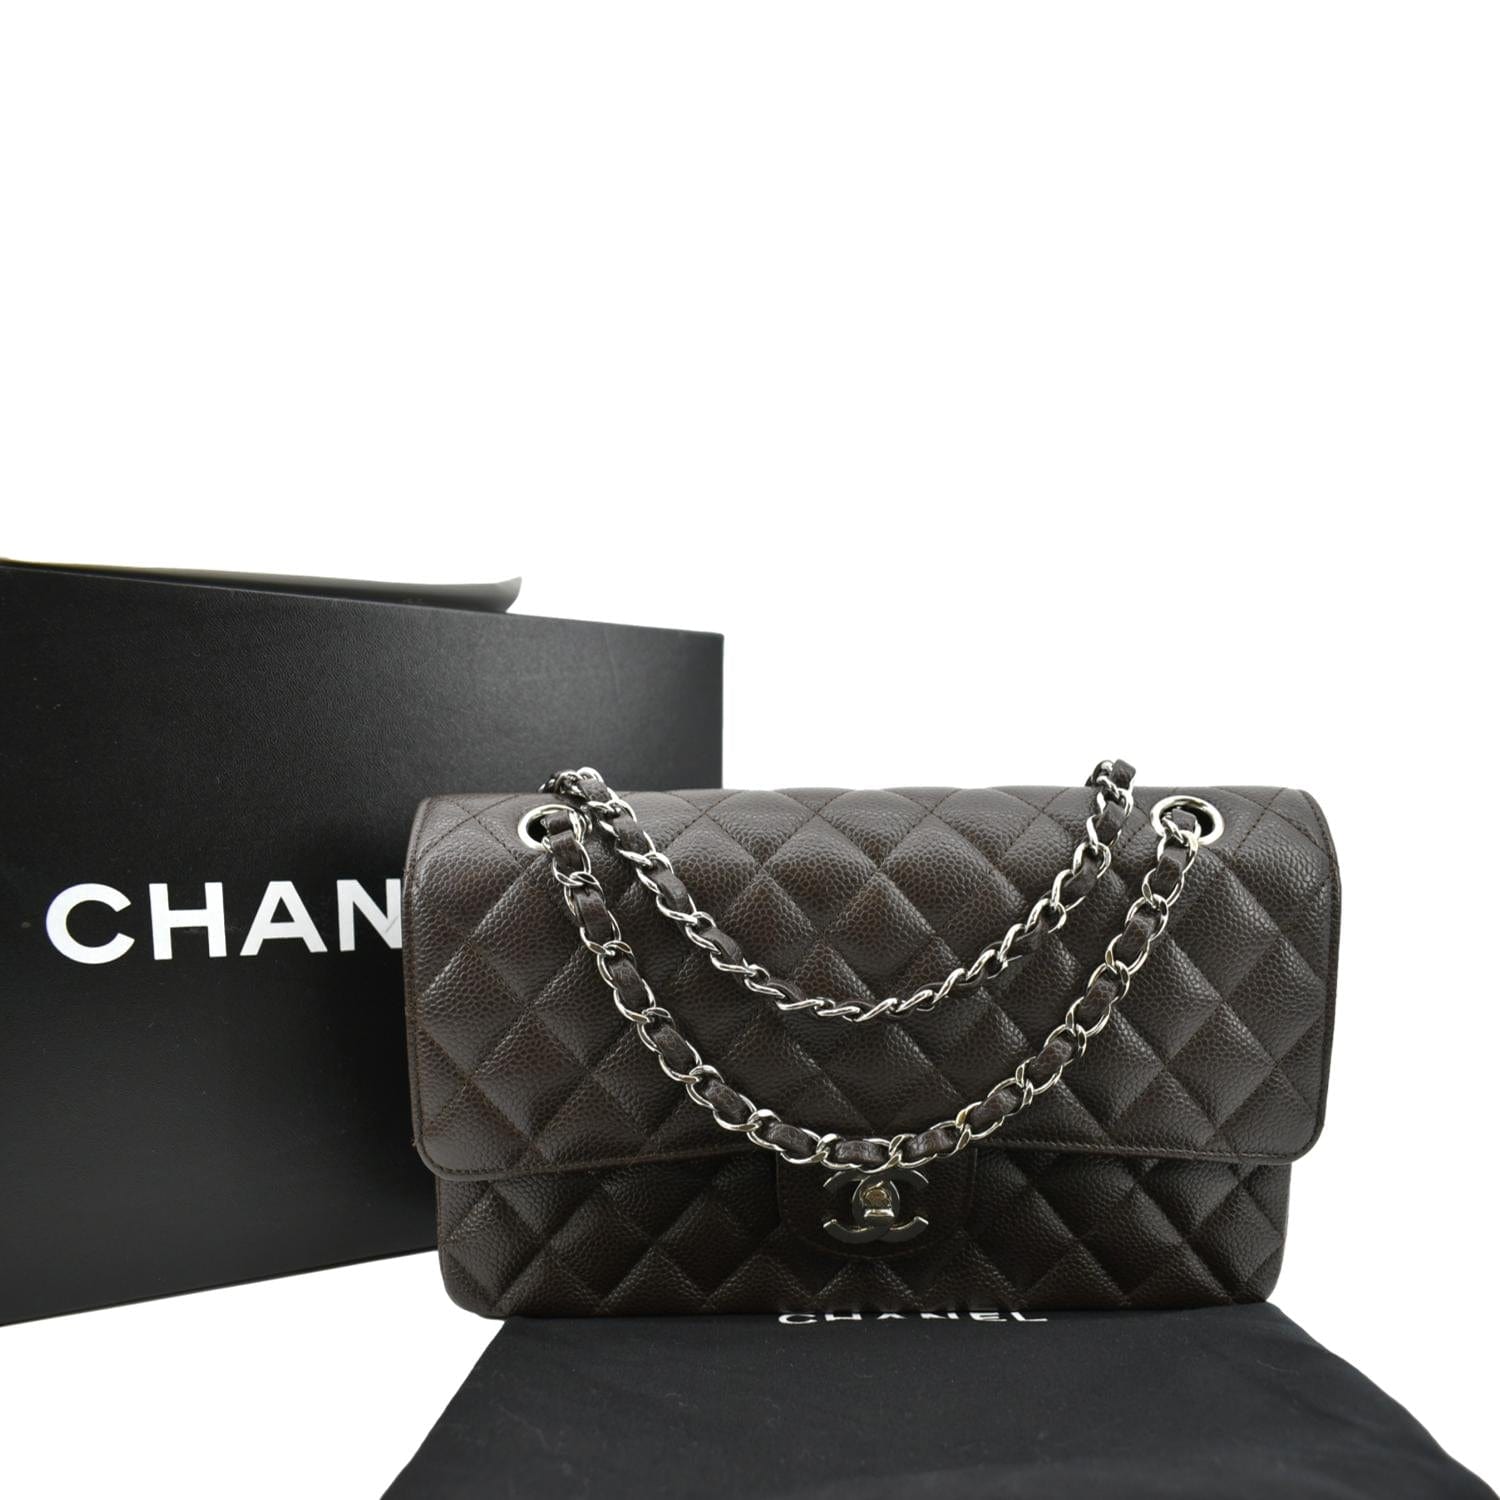 Chanel White Medium Classic Double Flap Bag